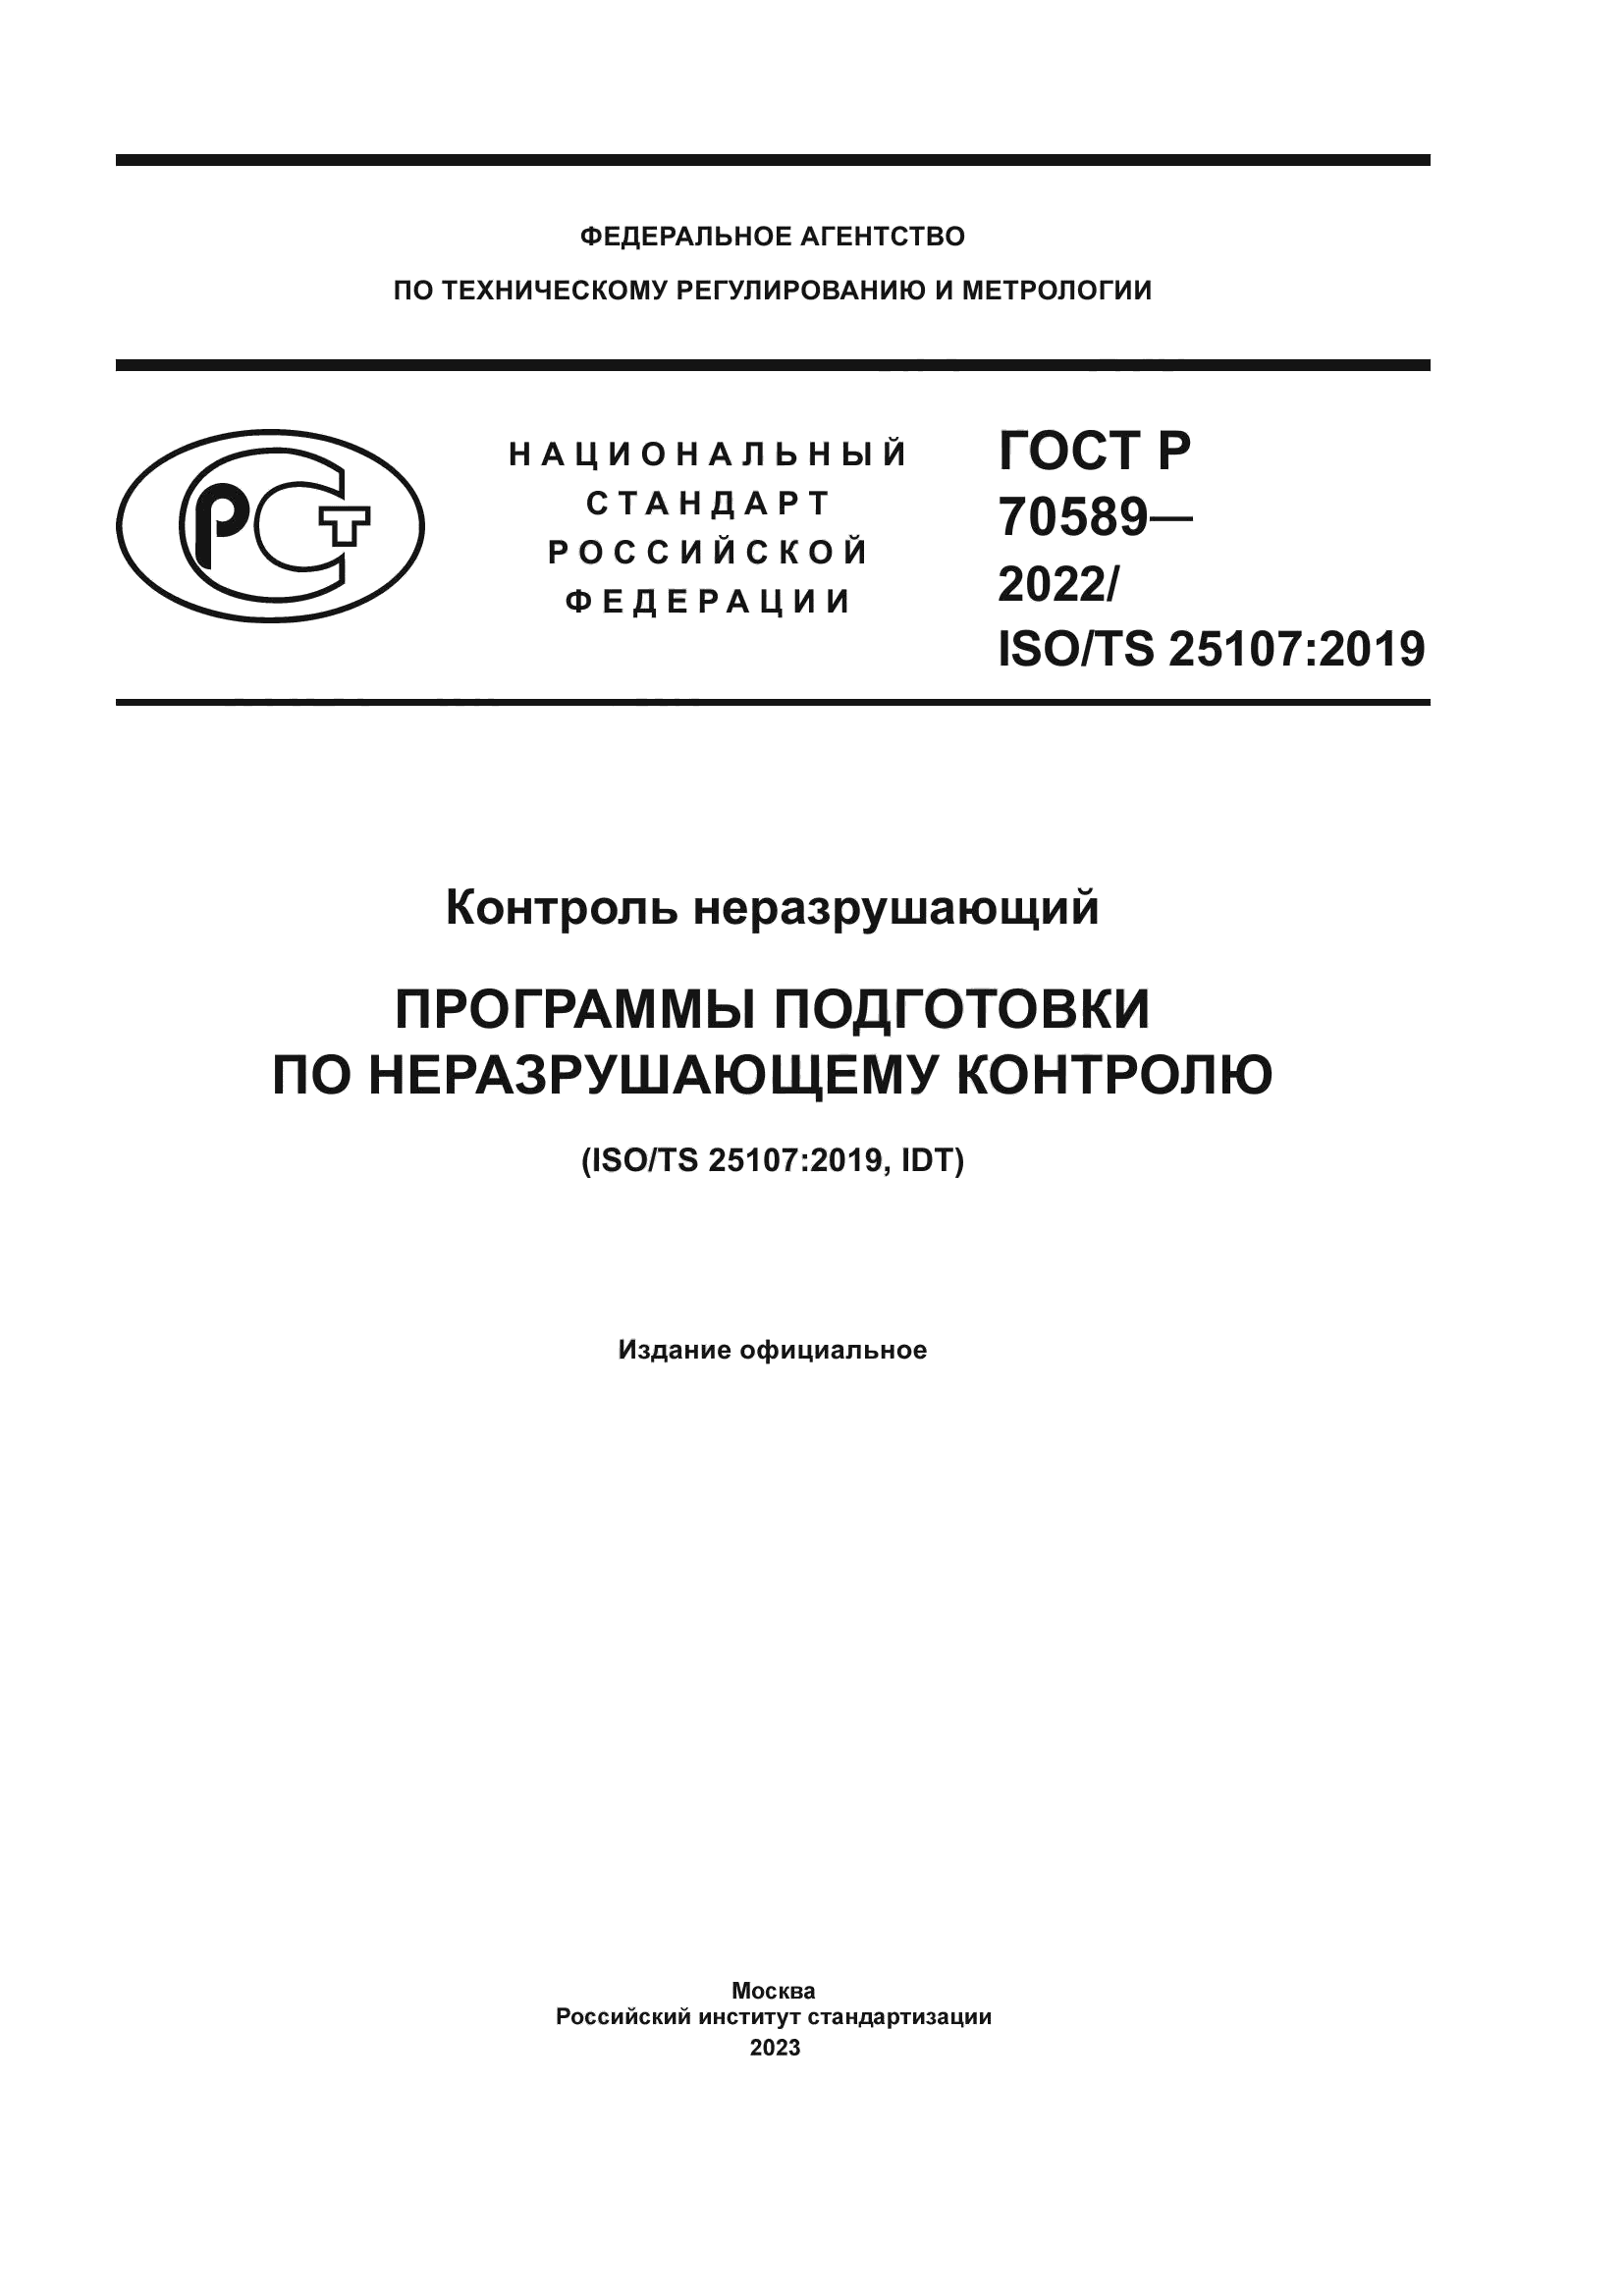 ГОСТ Р 70589-2022